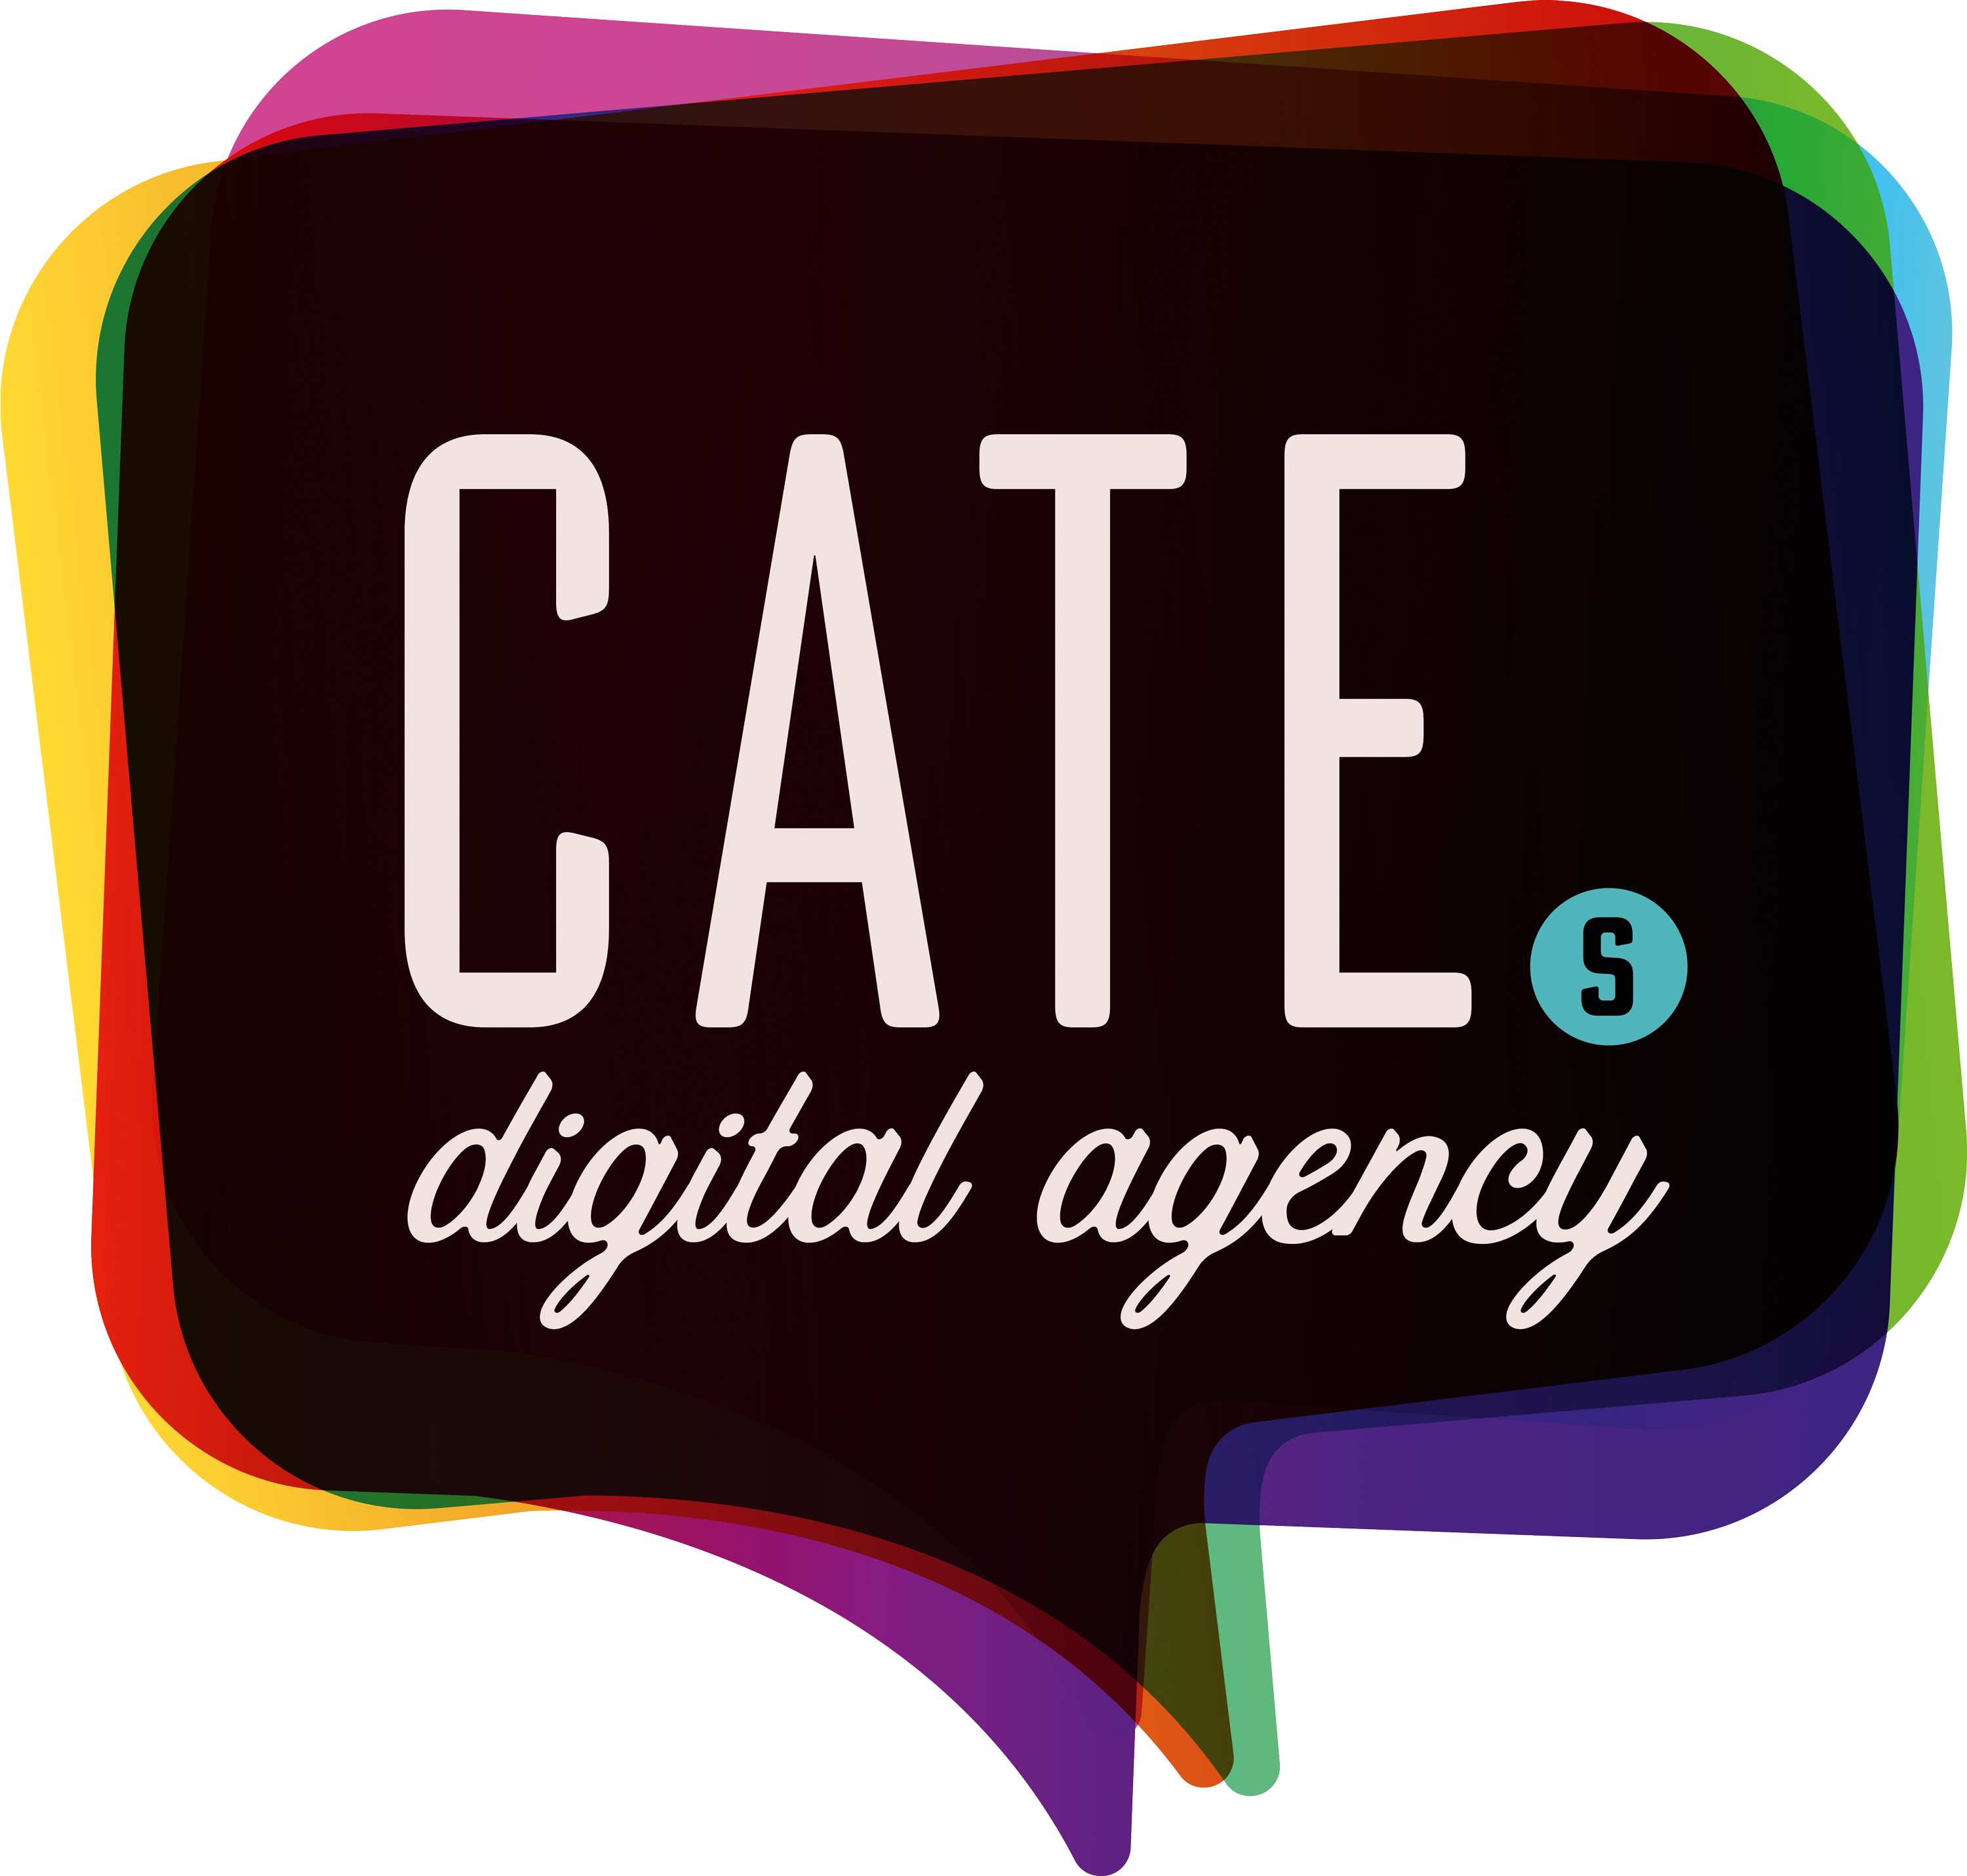 CATEs digital agency